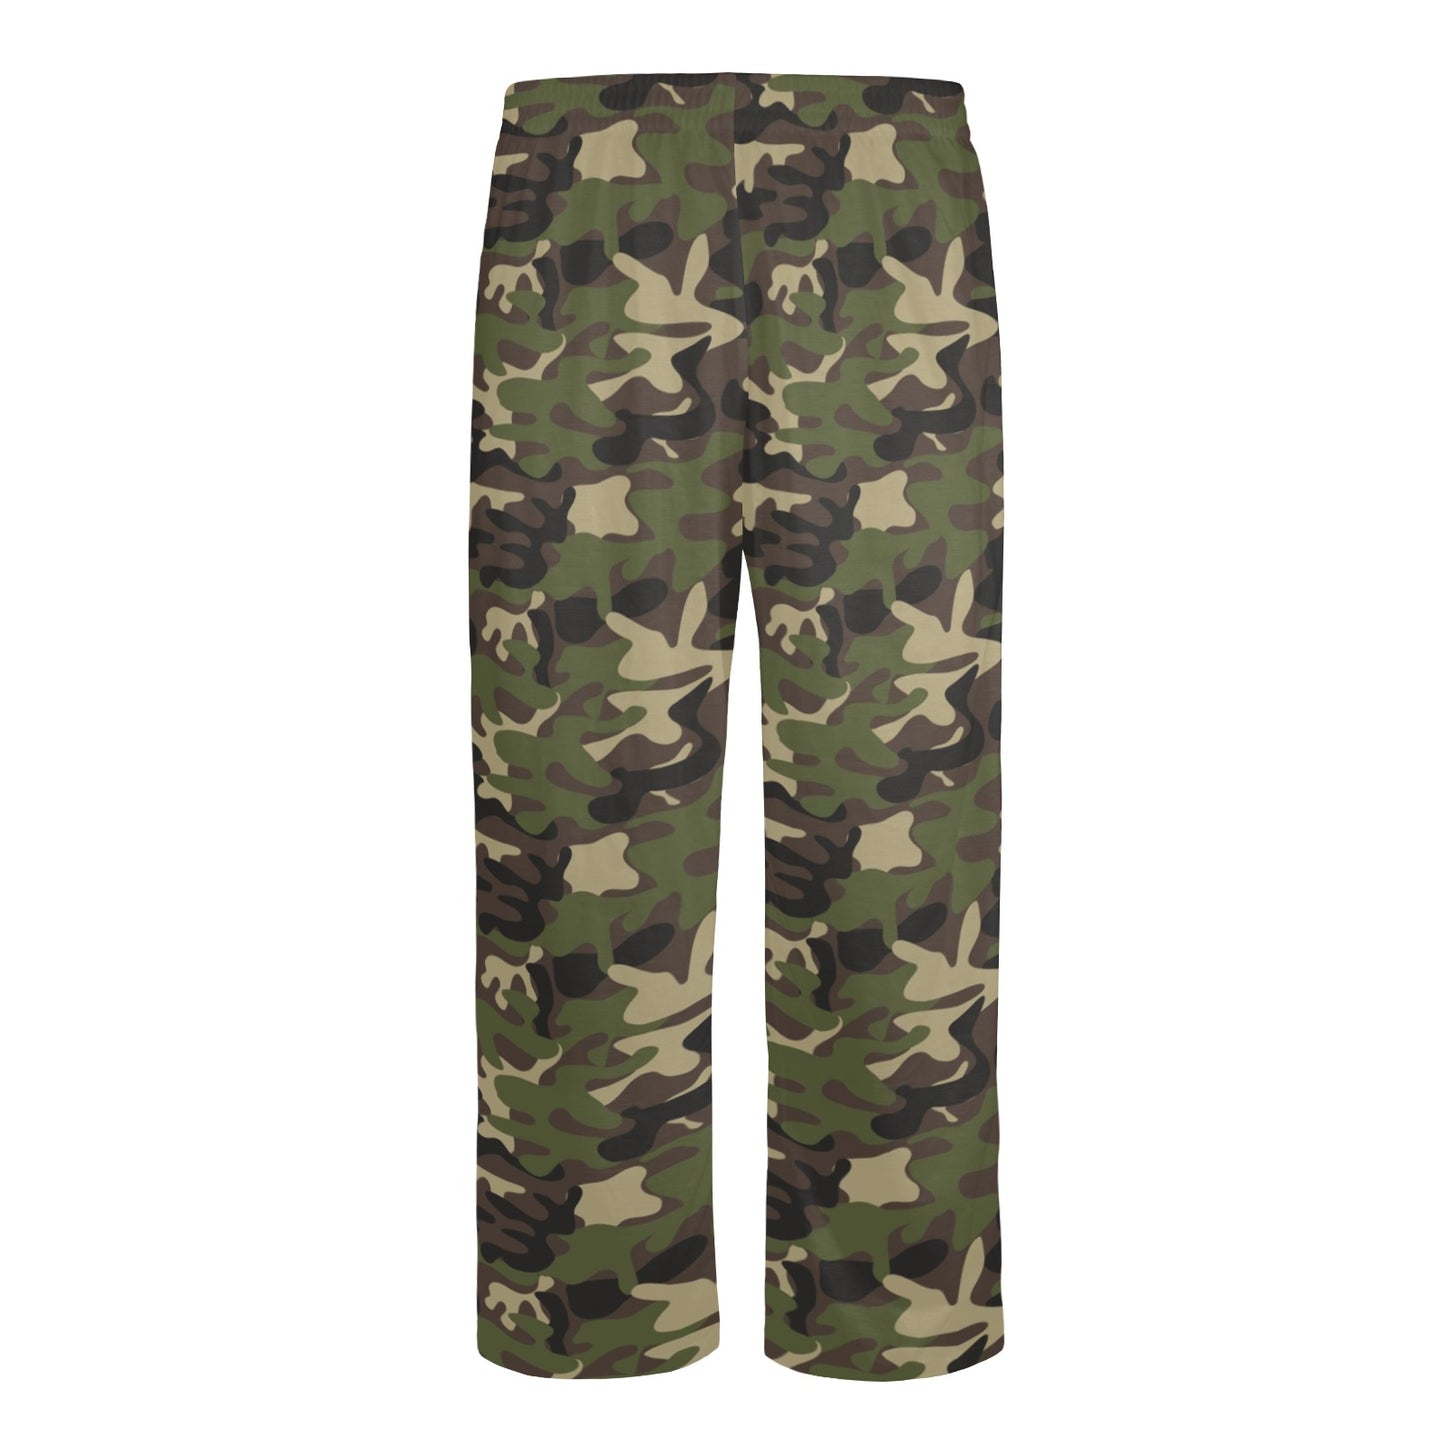 Camo Men Pajamas Pants, Green Camouflage Satin PJ Pockets Sleep Lounge Trousers Couples Matching Trousers Bottoms Starcove Fashion